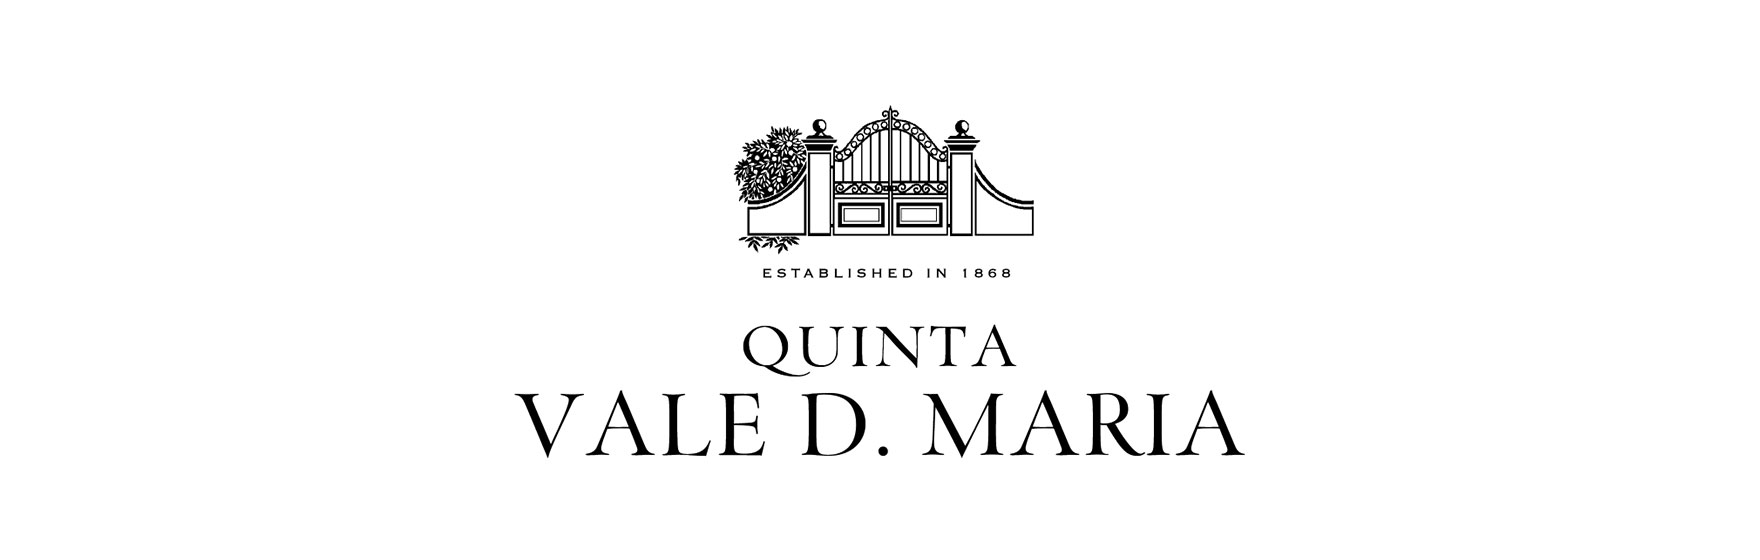 Quinta Vale D. Maria